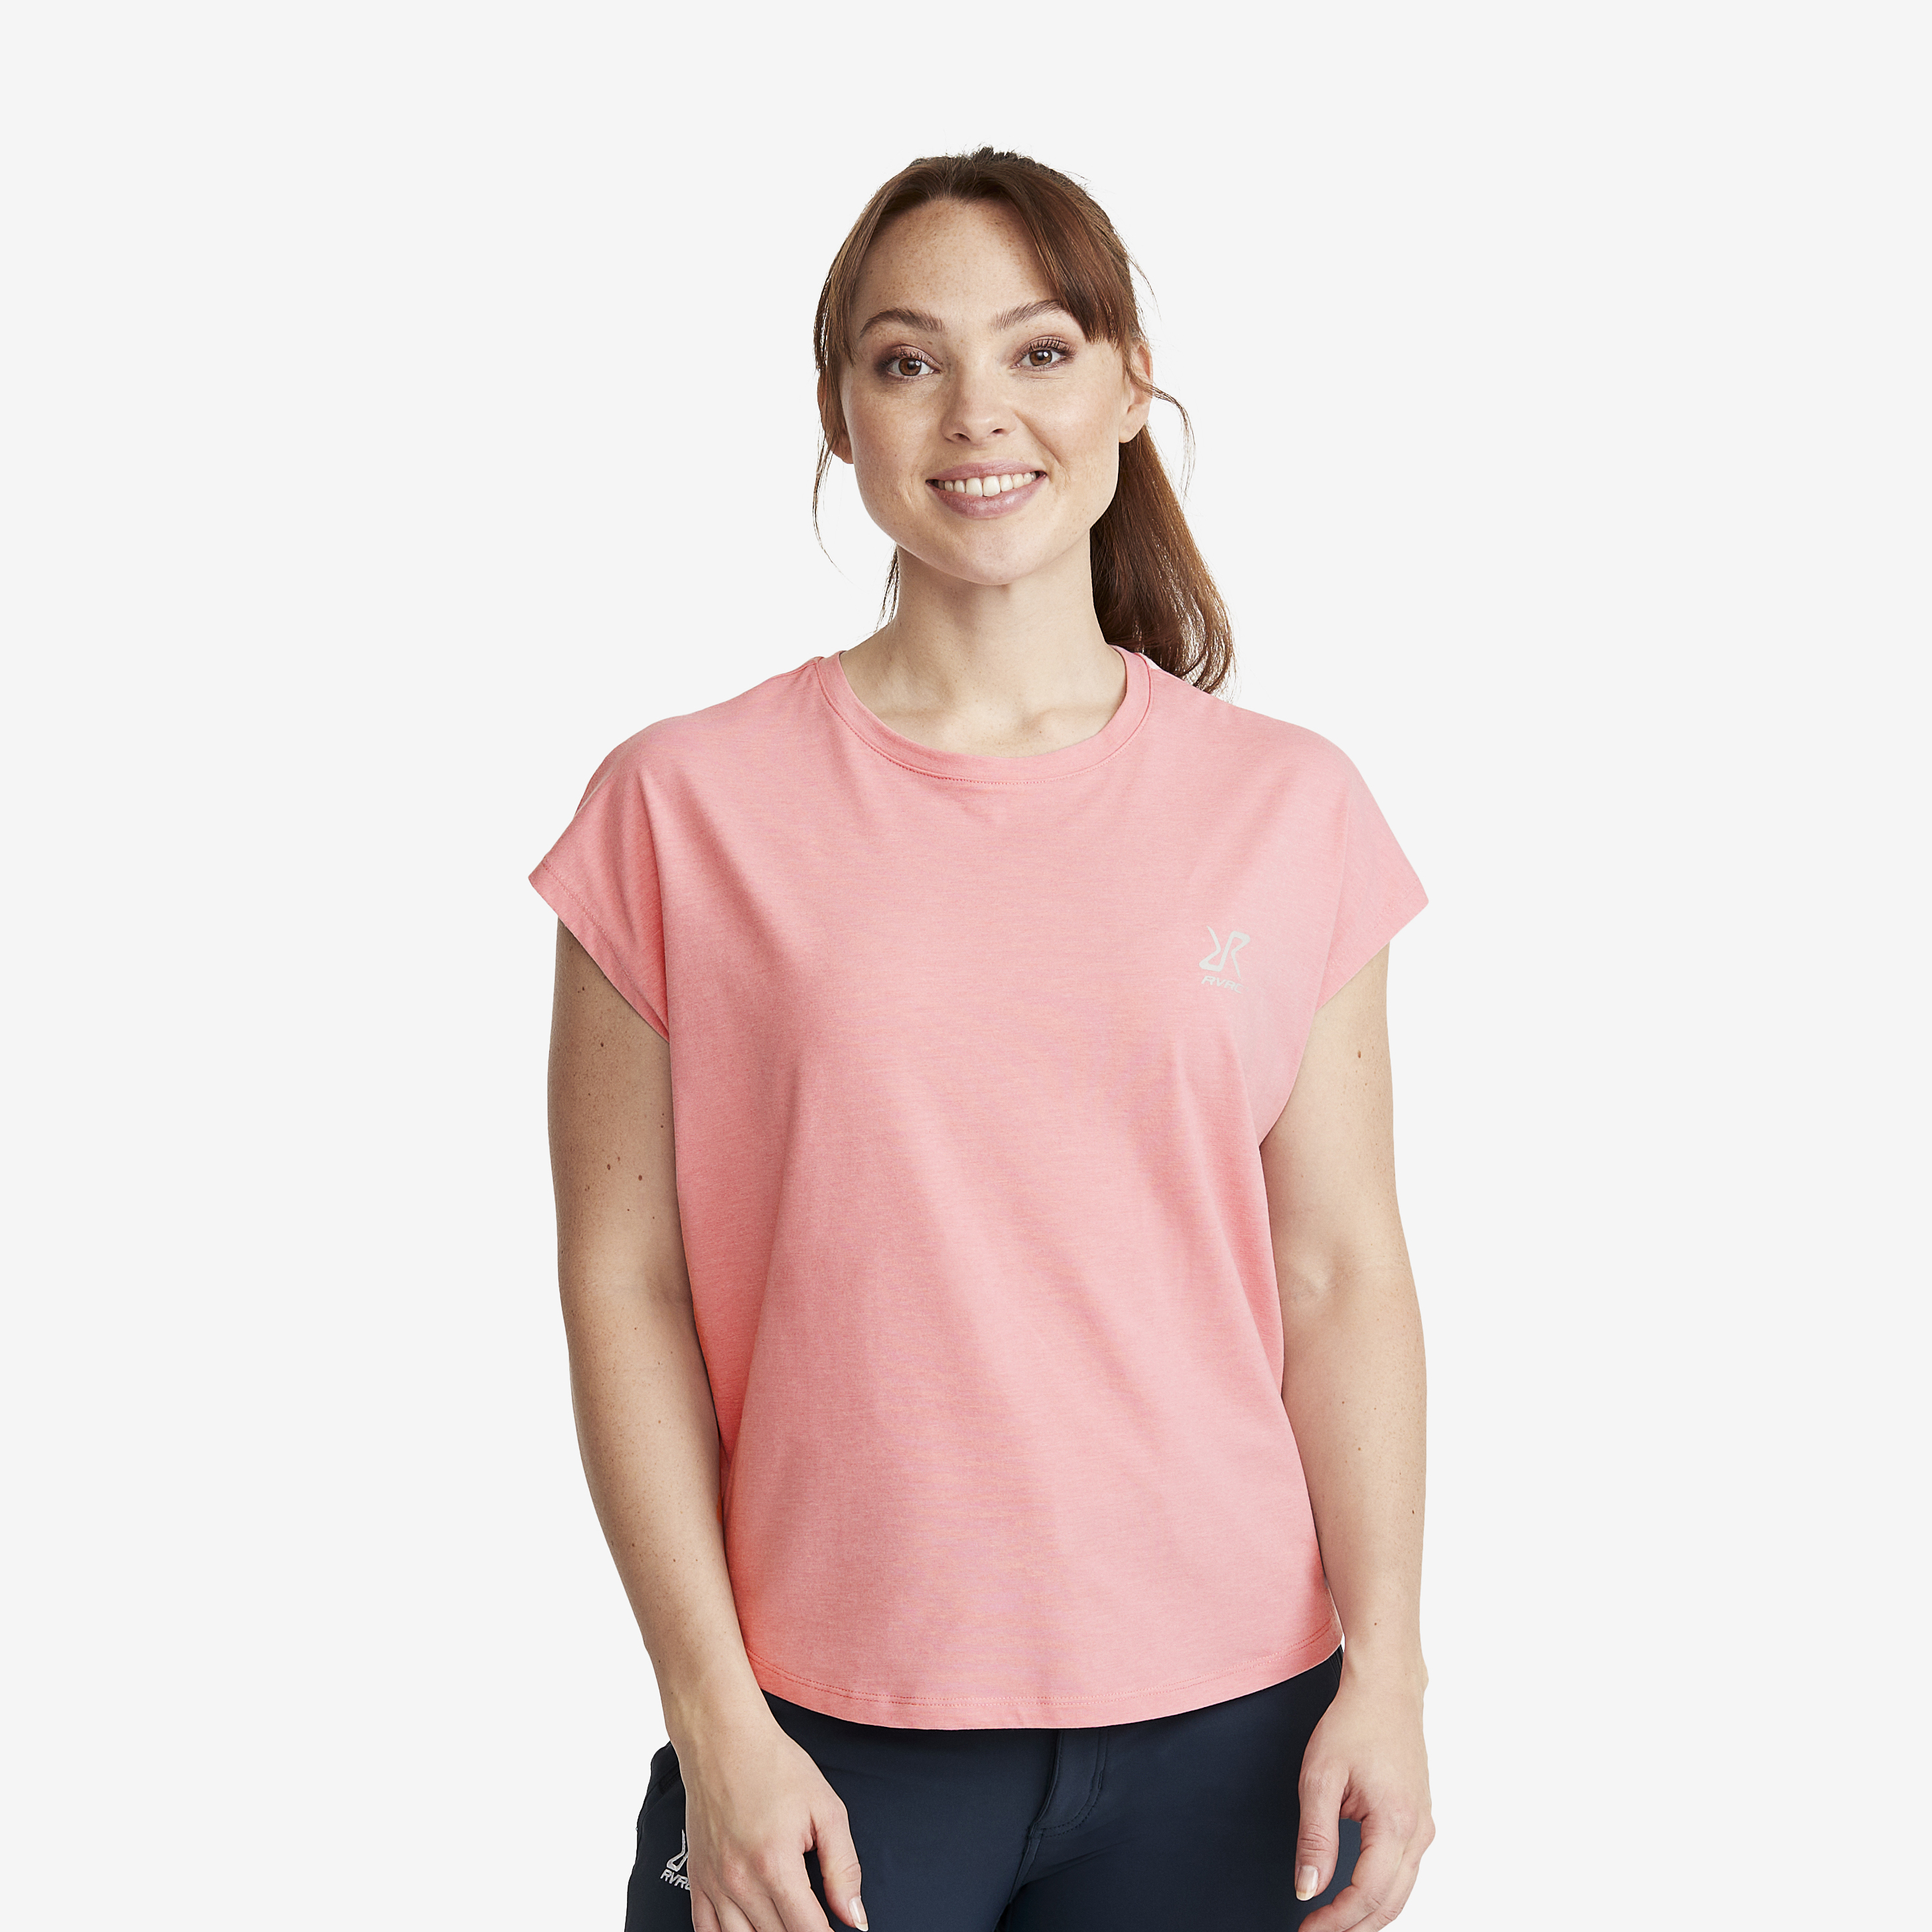 Soft Sleeveless Top - Dam - Dusty Pink, Storlek:L - Dam > Tröjor > T-shirts